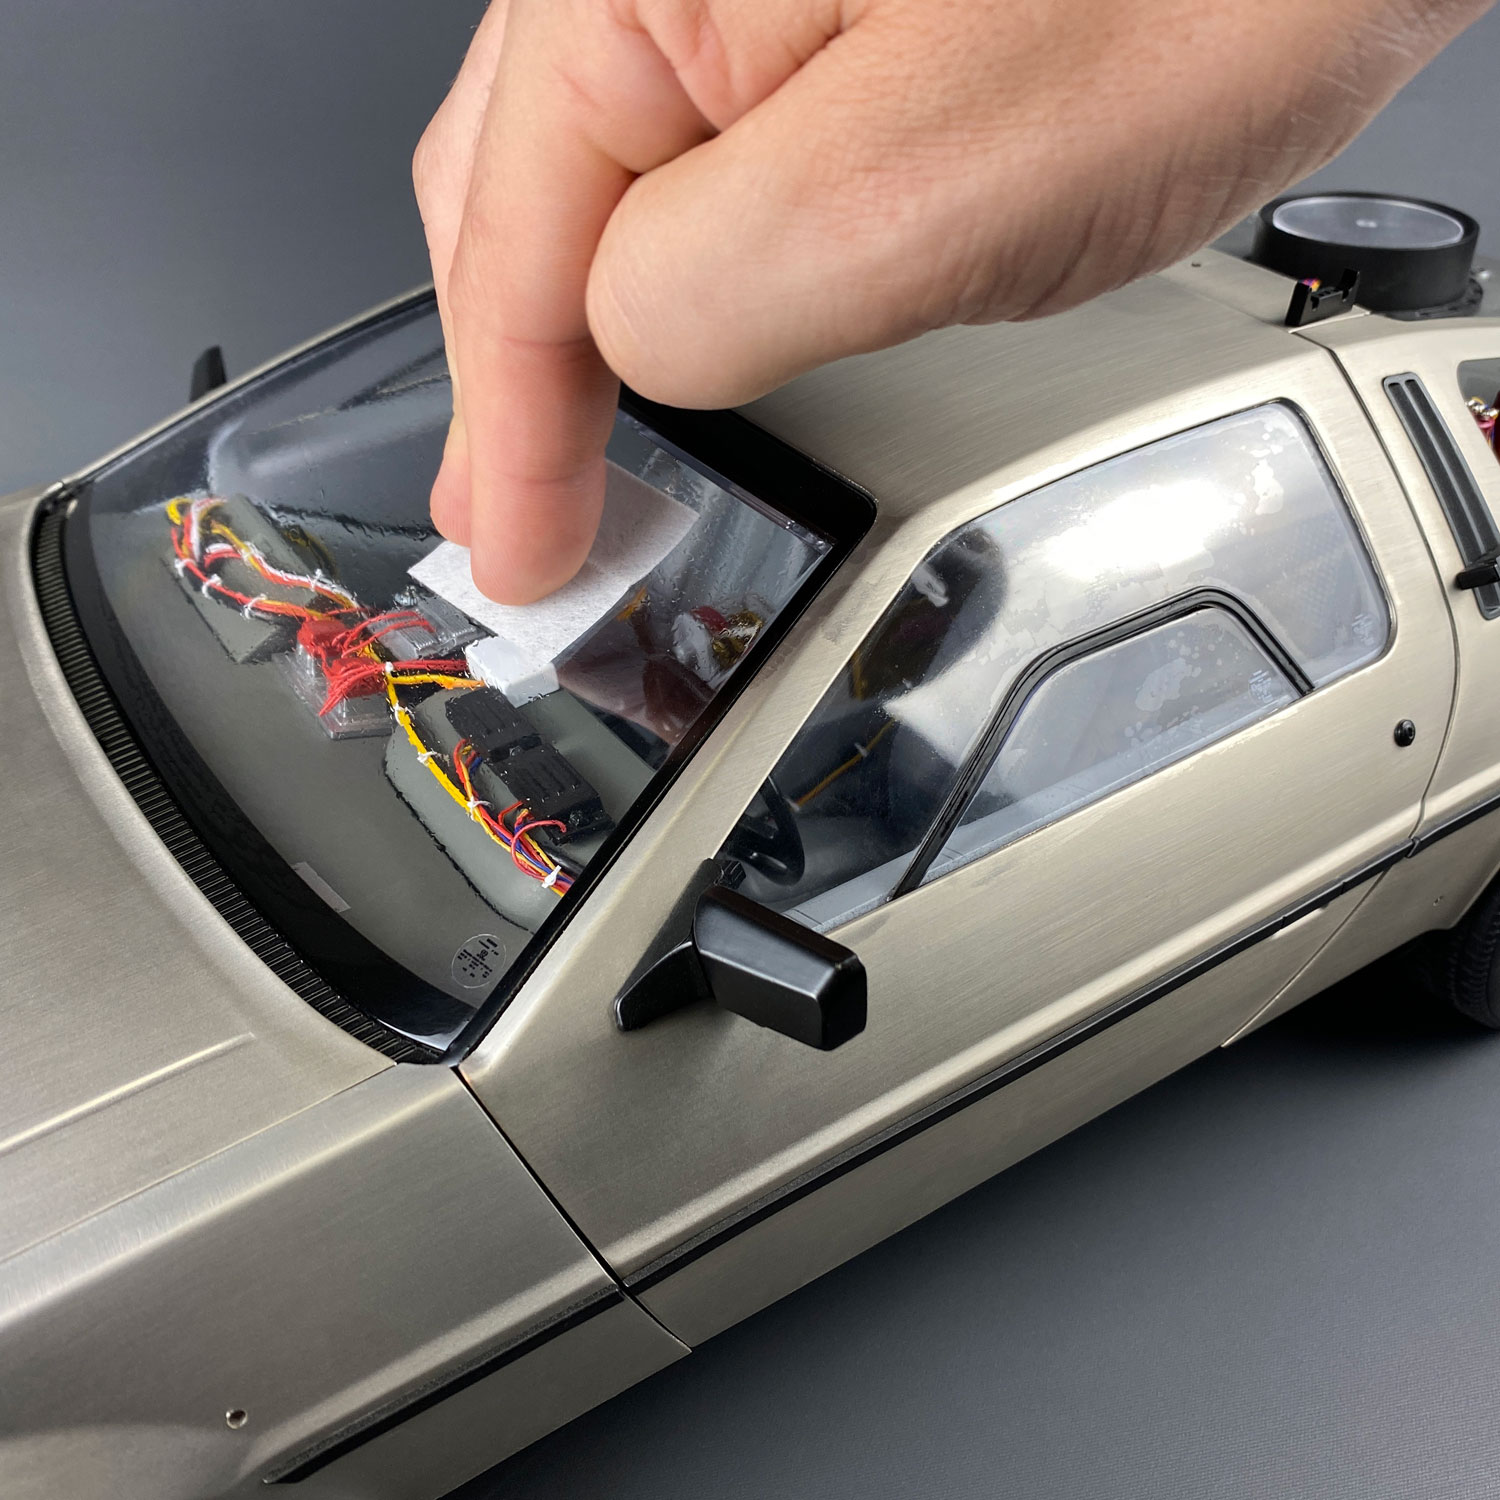 Using wet screen cleaner wipe on DeLorean windshield